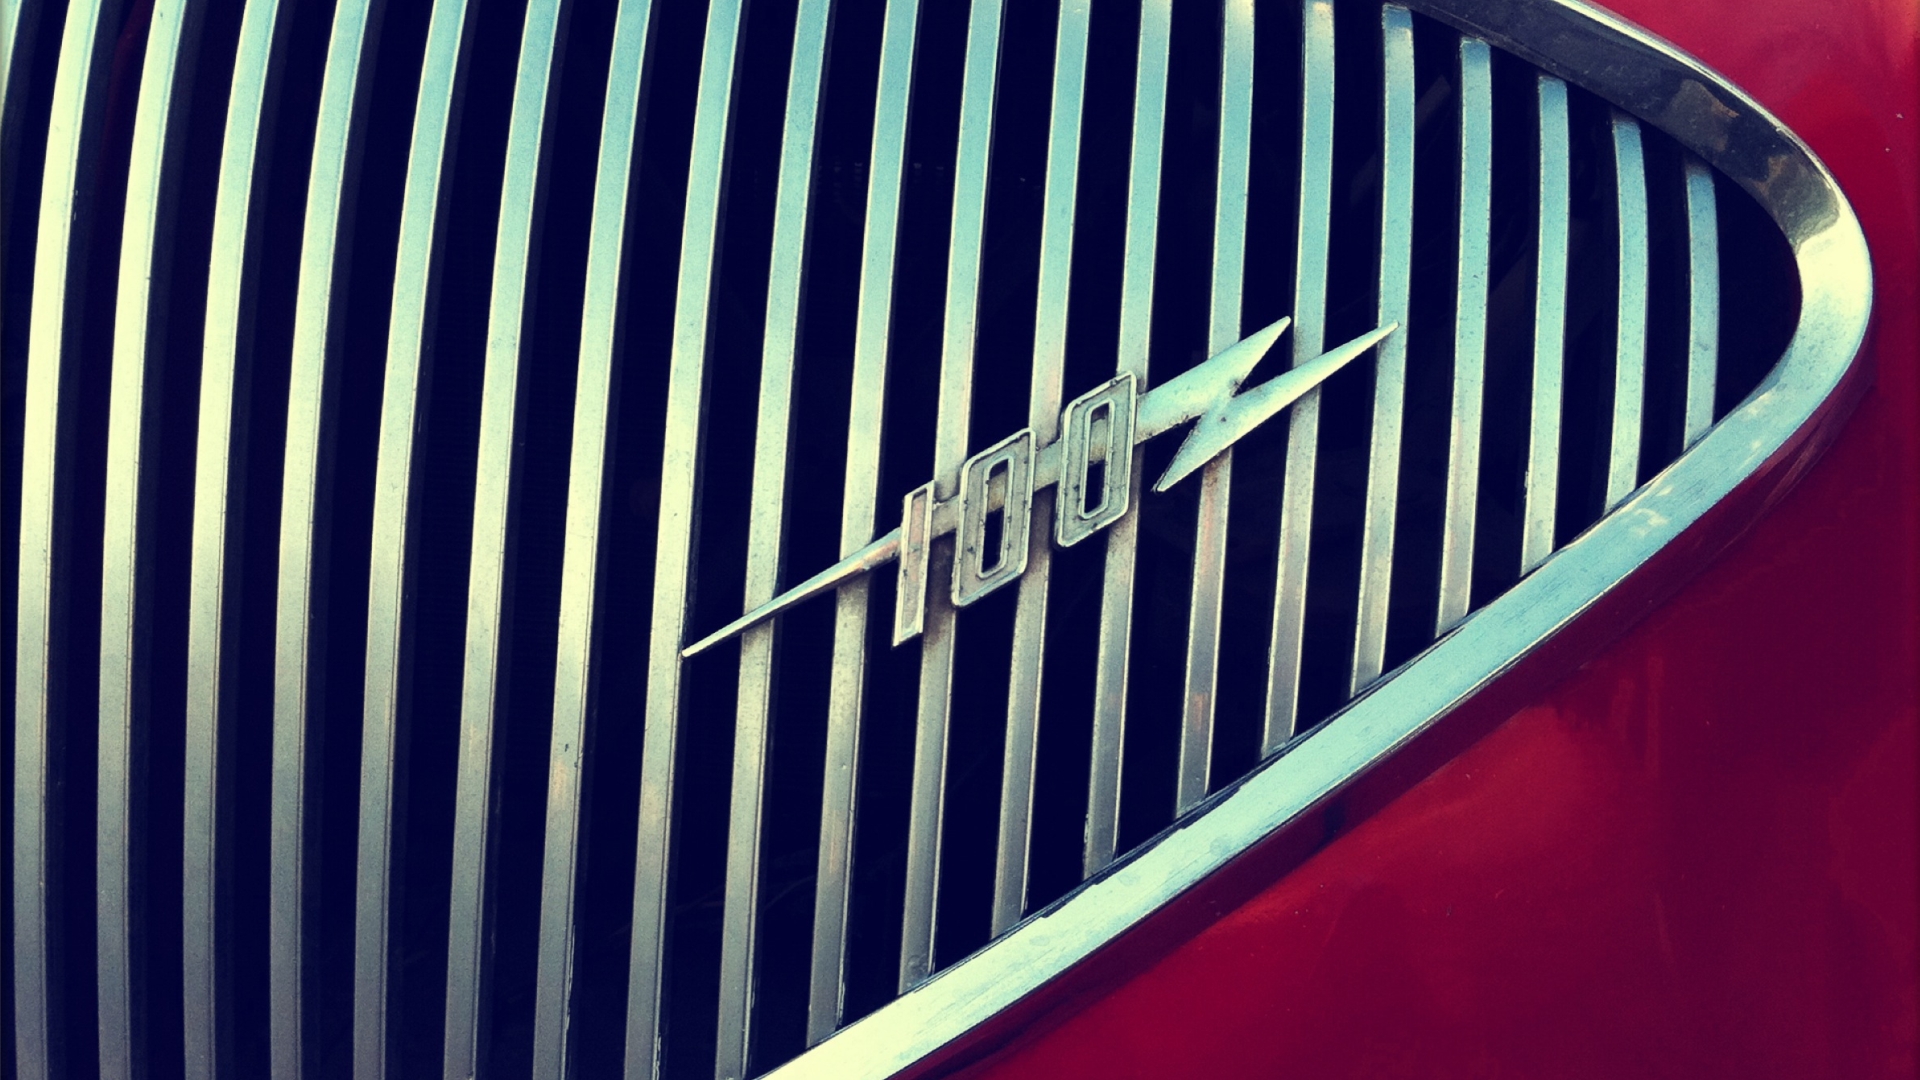 Vehicles Austin-Healey 100 HD Wallpaper | Background Image